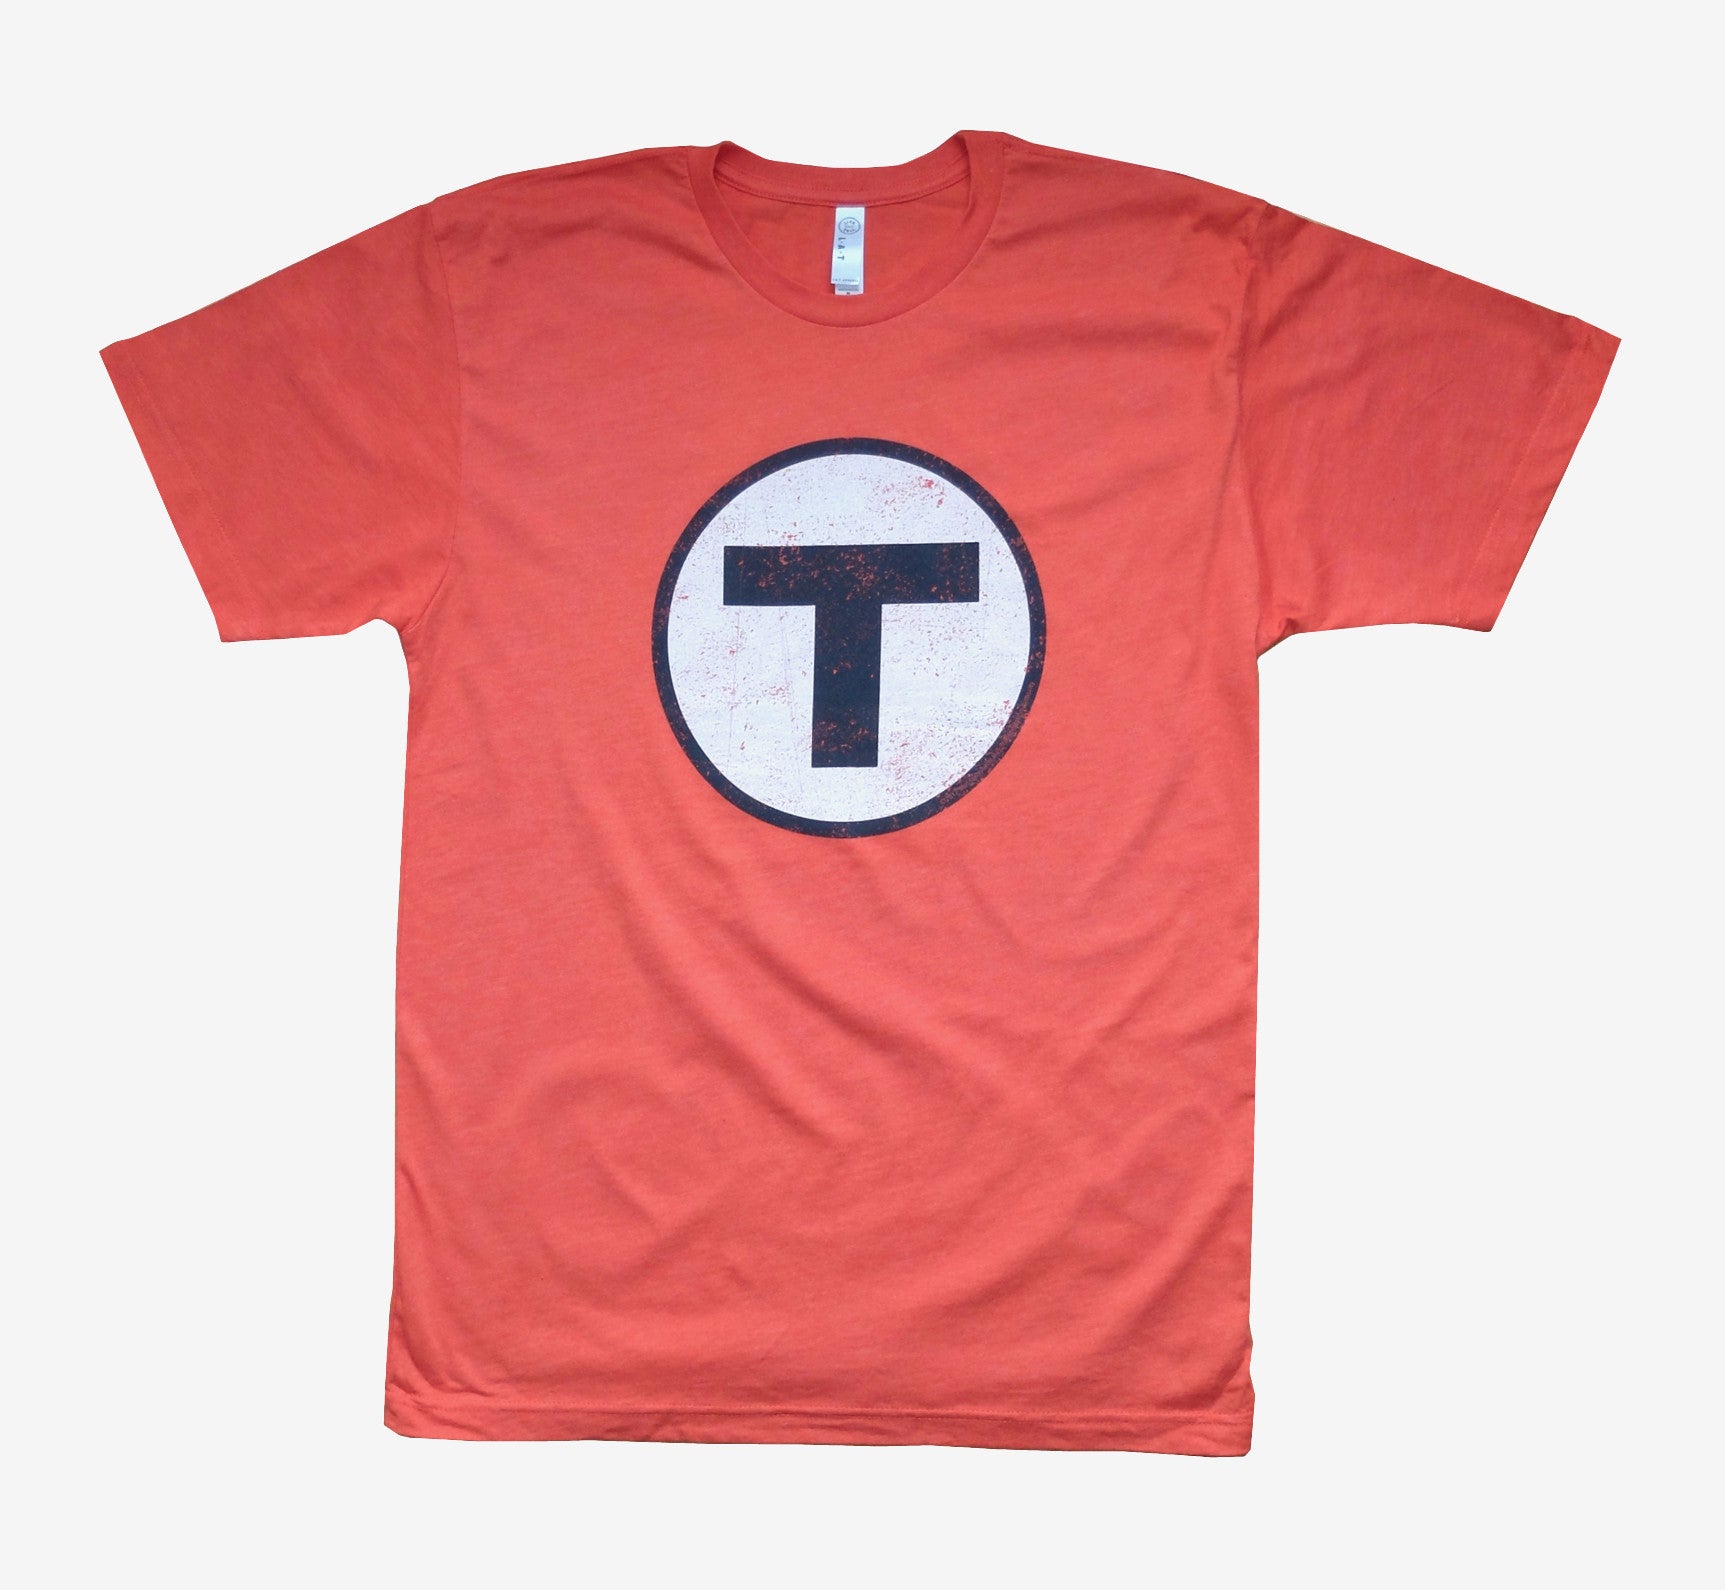 Orange T-Shirt with White & Black MBTA "T" Logo